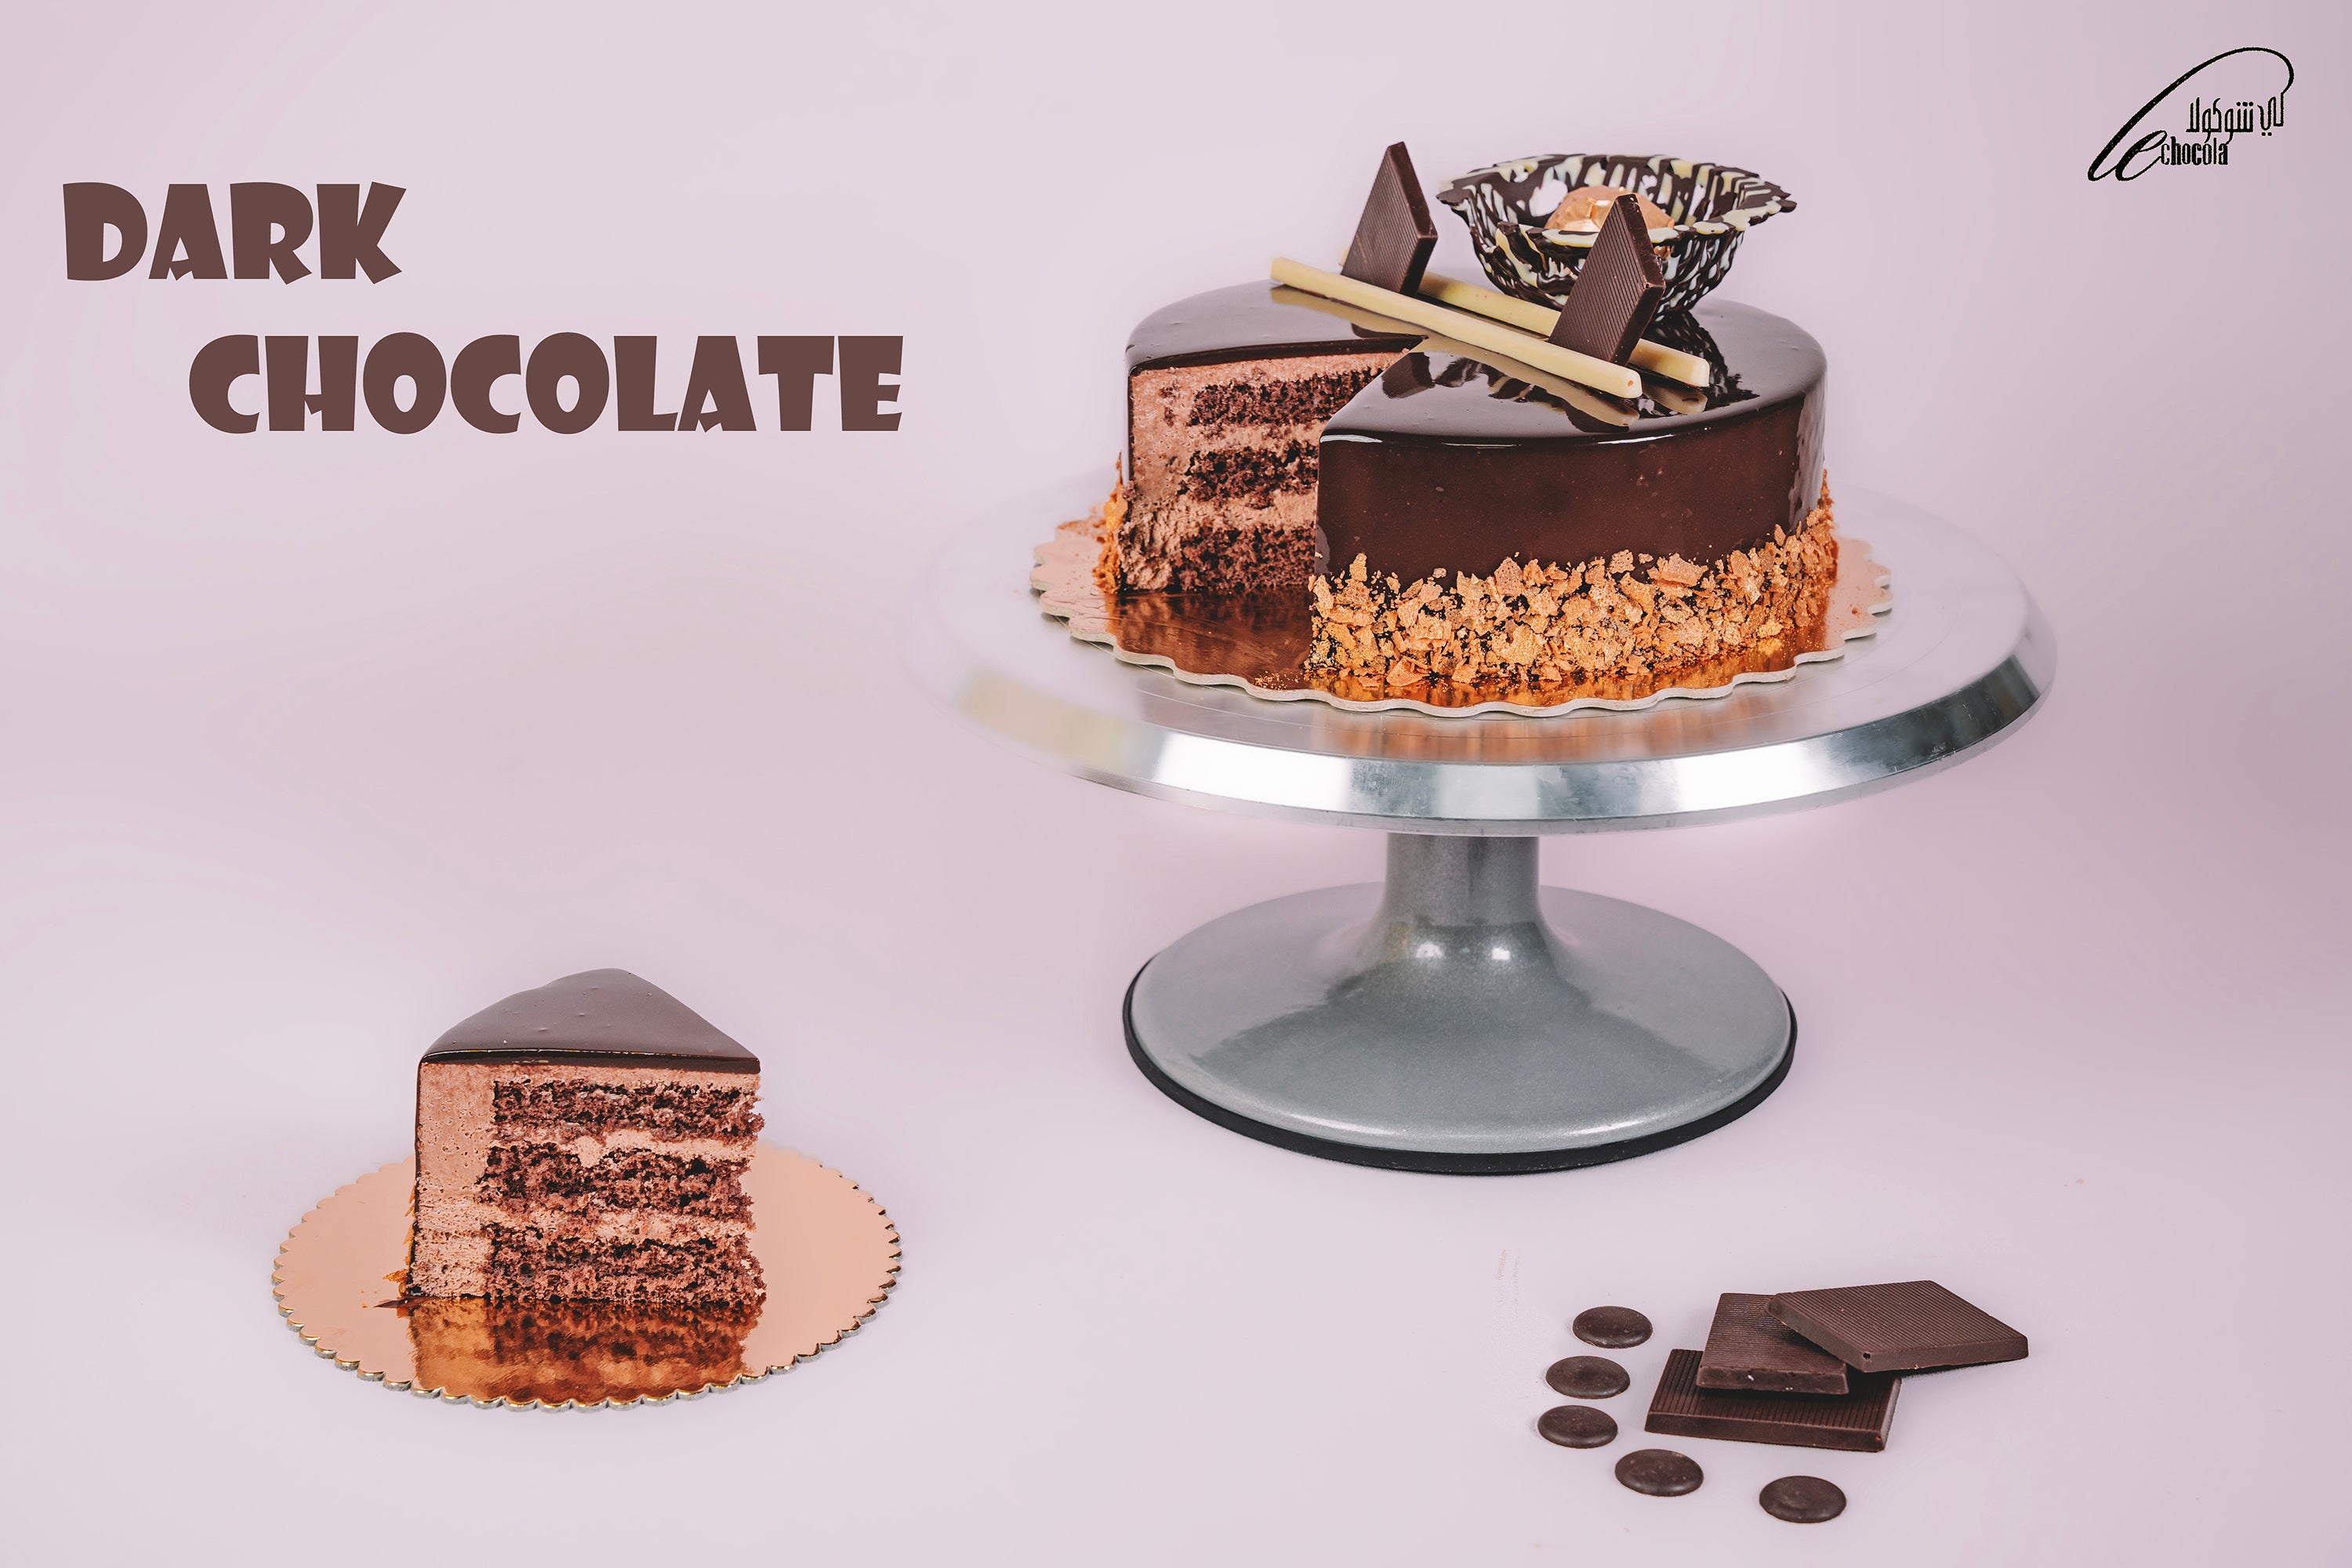 Special Dark Chocolate Birthday Cakes